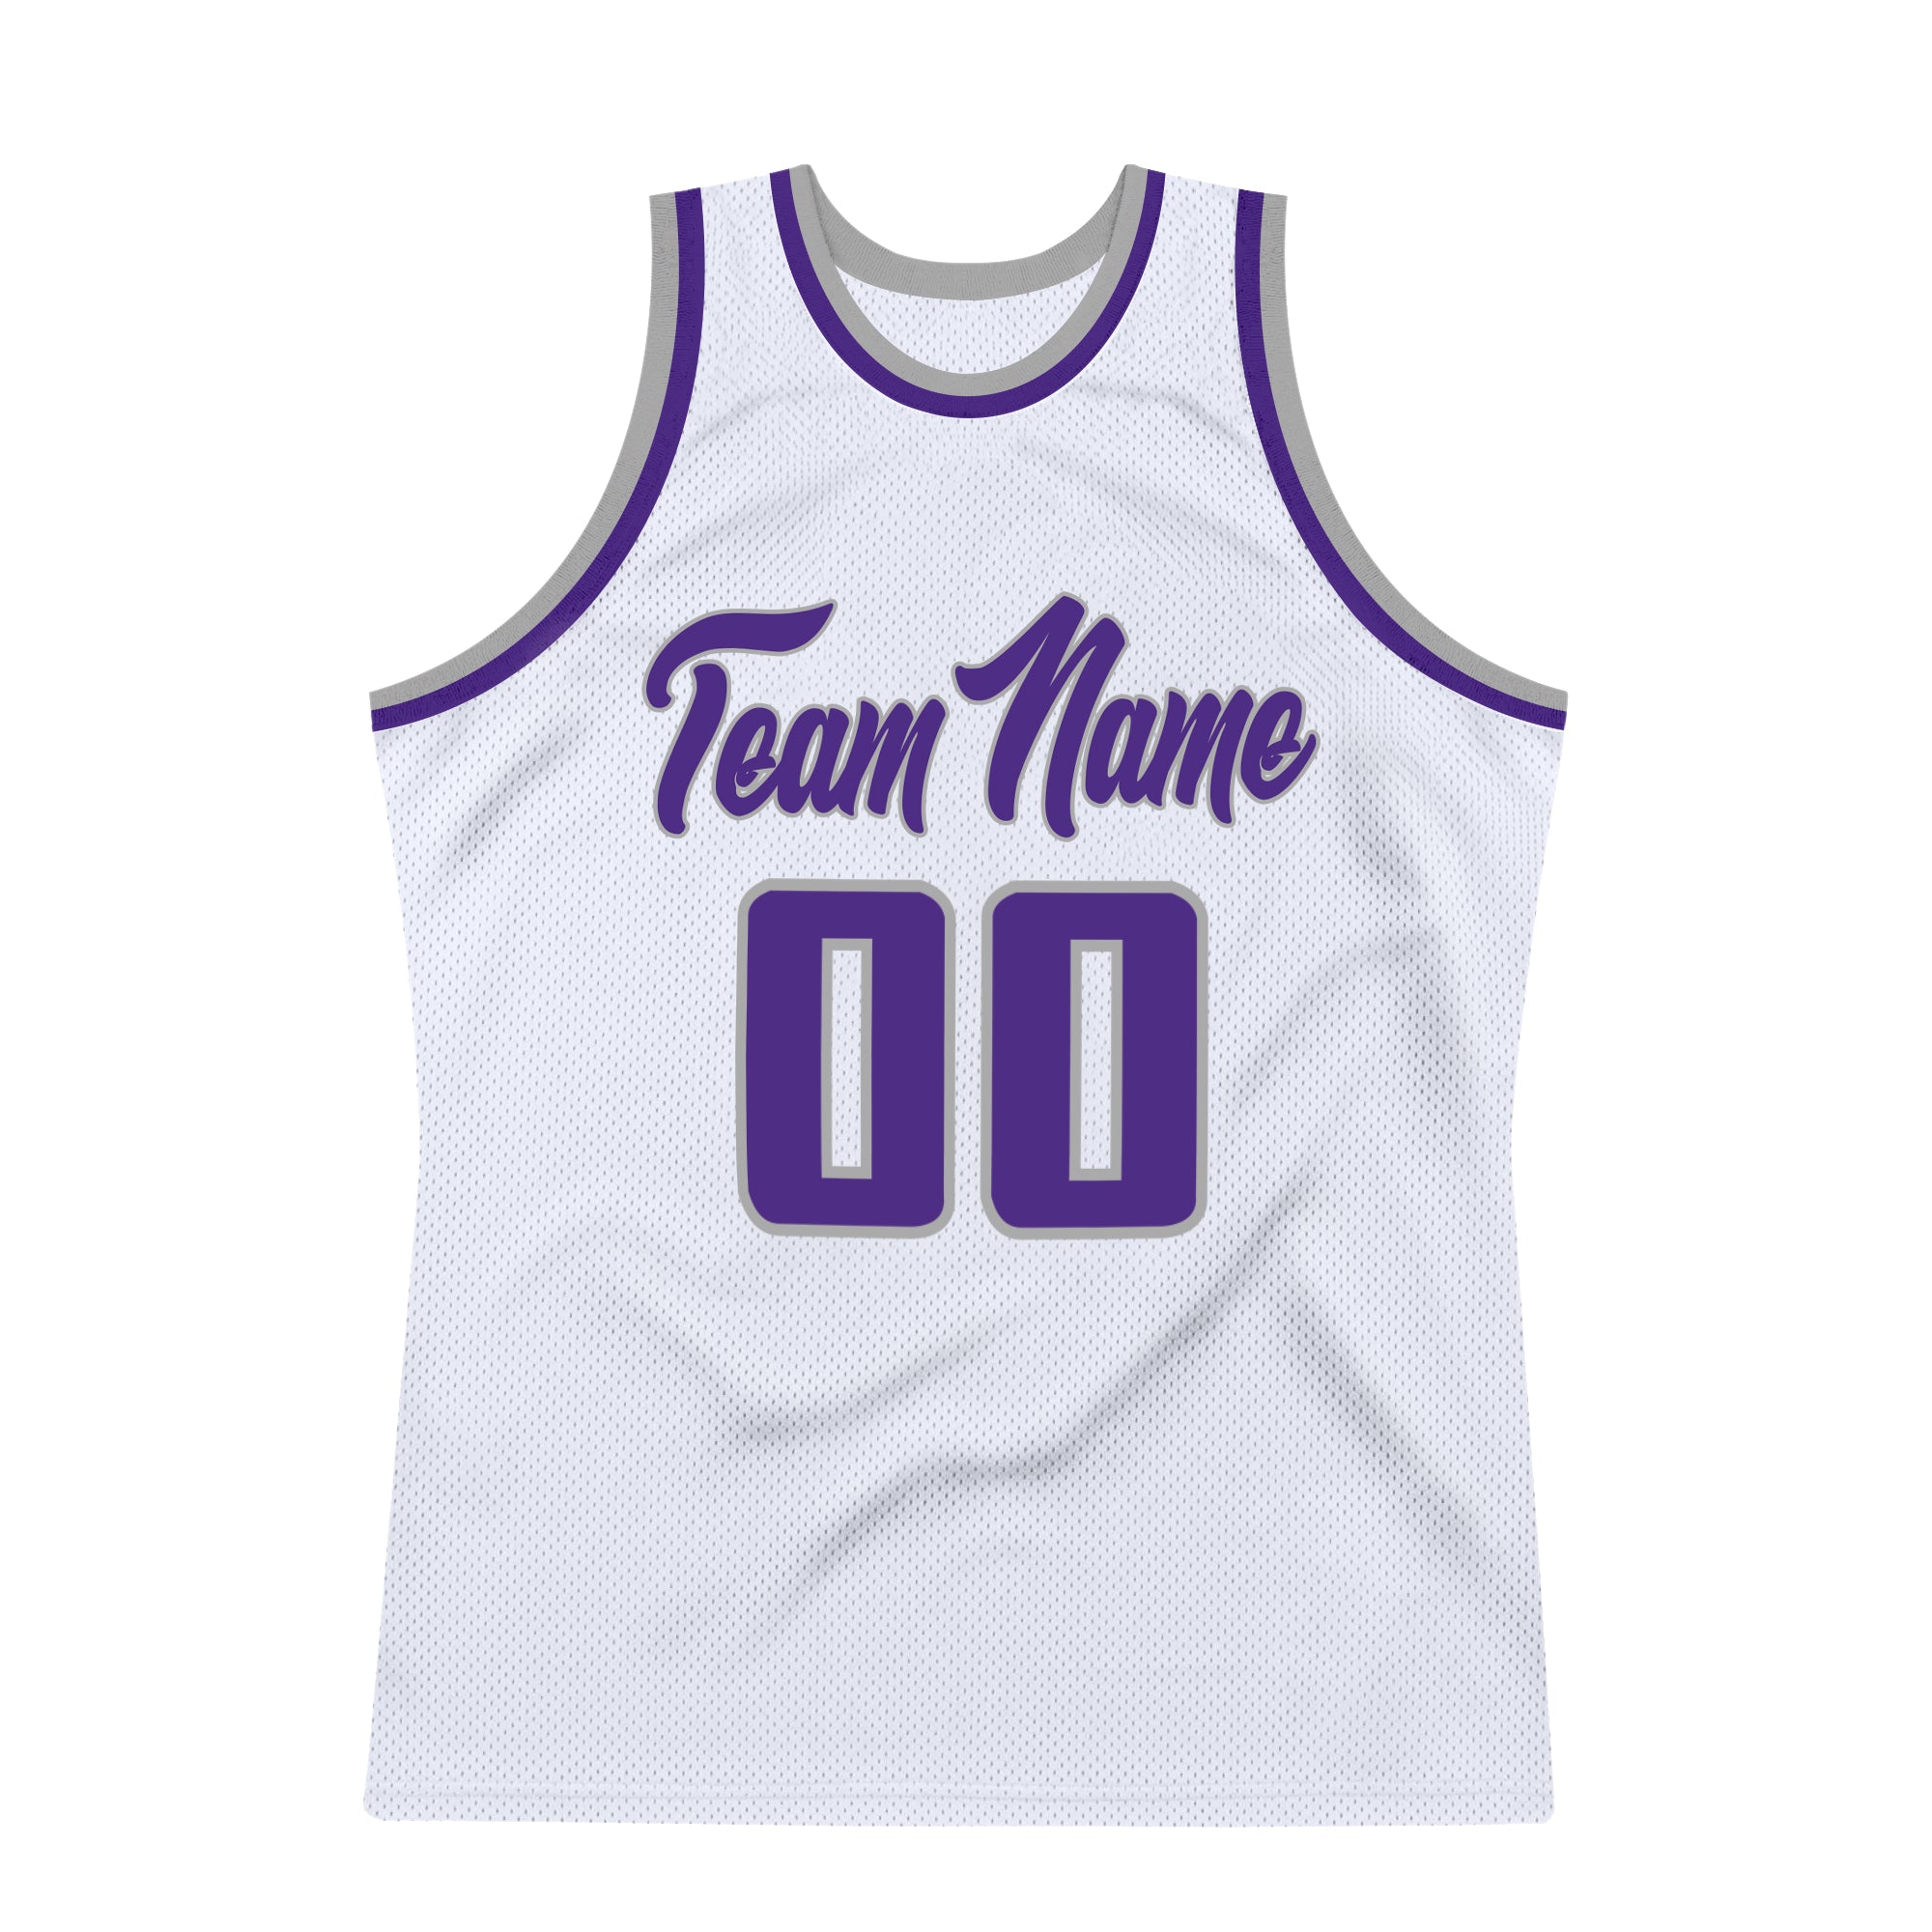 Custom White Purple-Gray Authentic Throwback Basketball Jersey